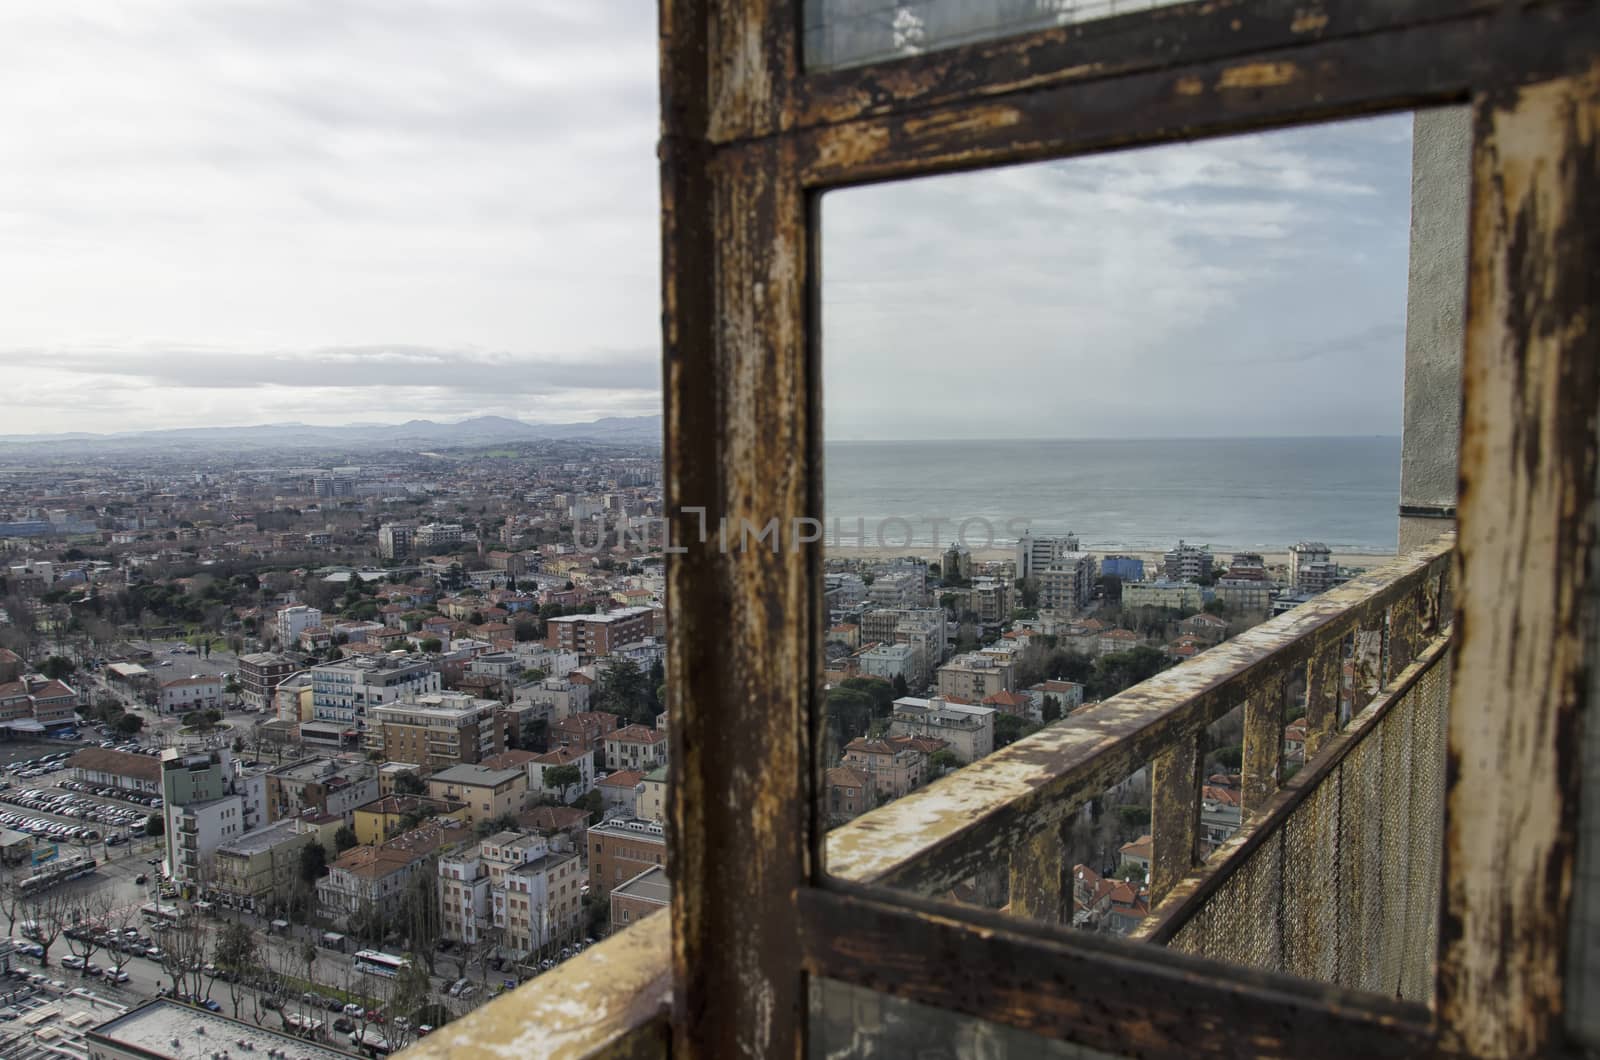 Italian city reflected on a rusty mirror